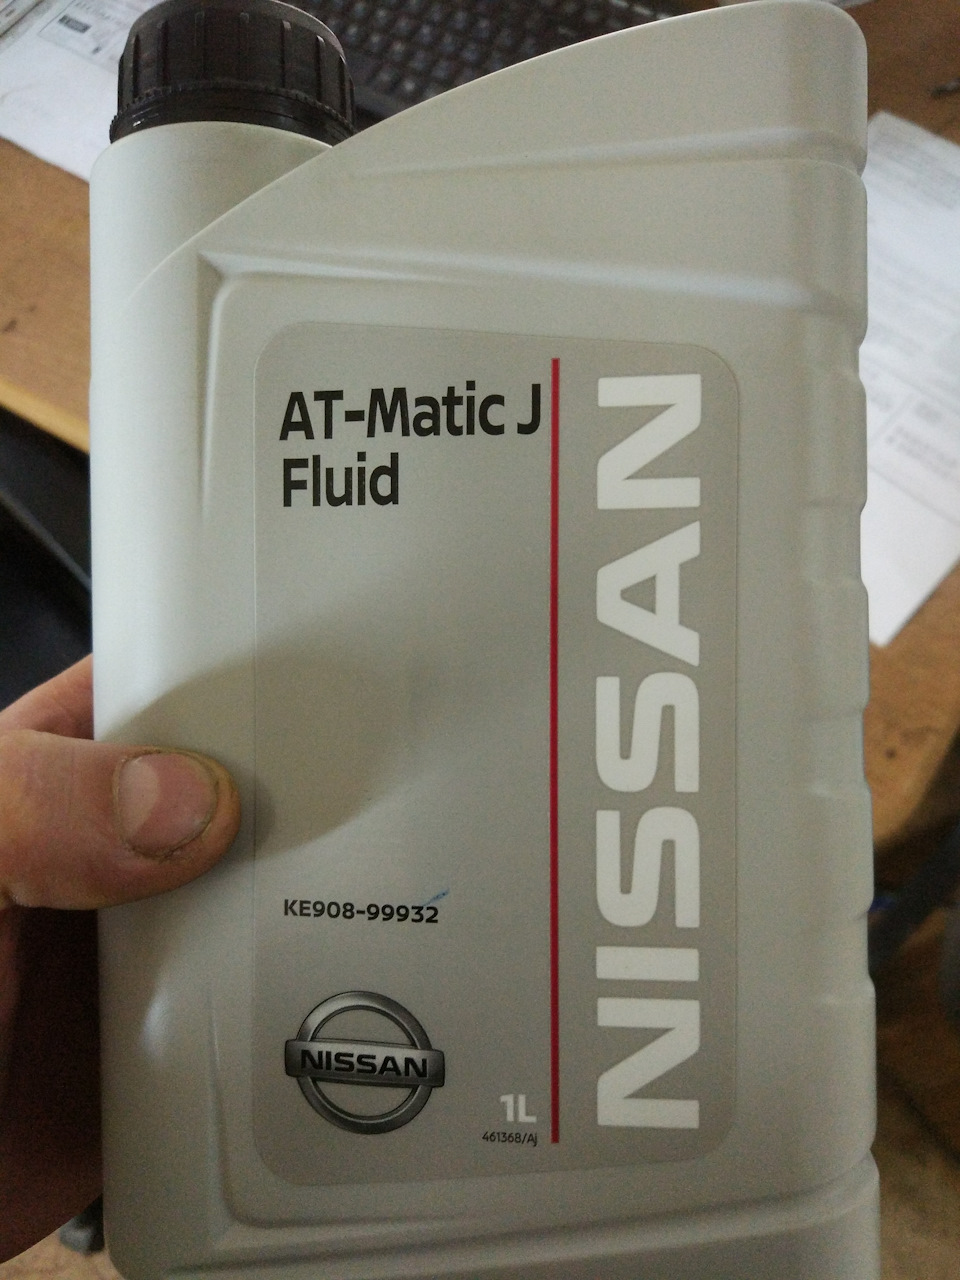 Nissan matic d atf. Nissan ATF matic j Fluid. At matic s Fluid Nissan 5л. Nissan matic d 5л артикул.